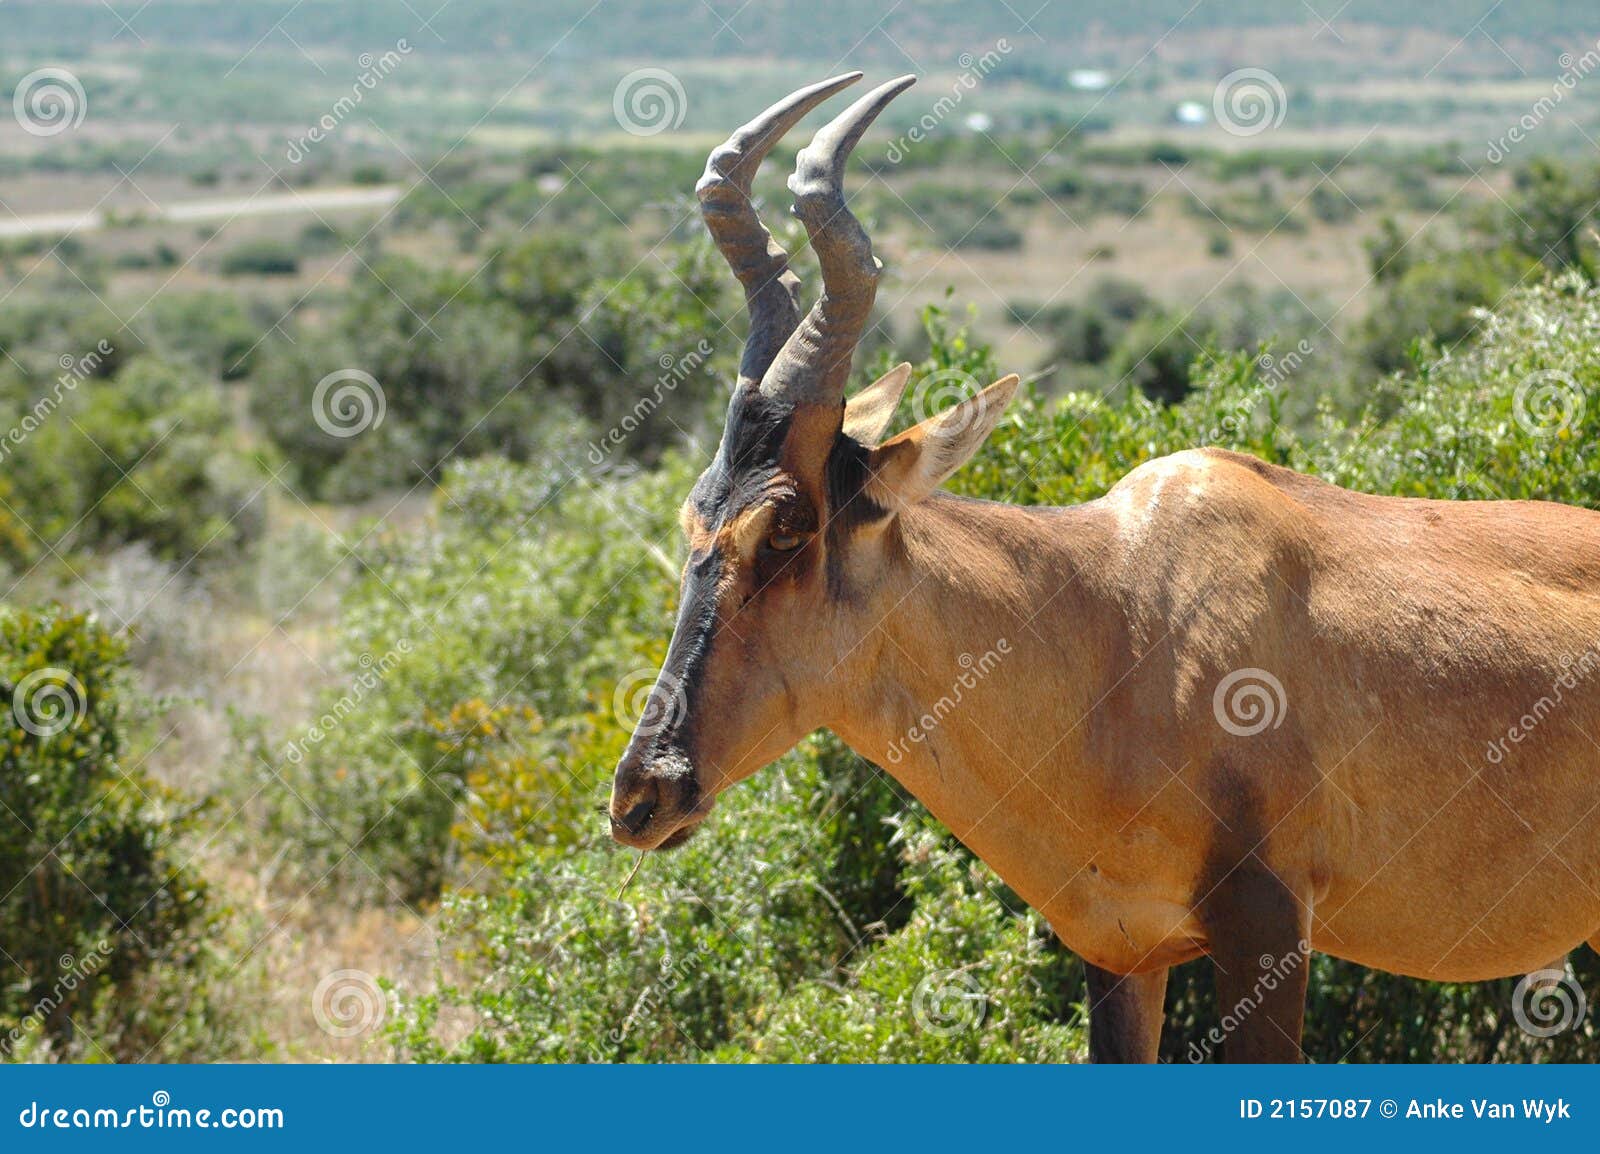 red hartebeest antelope